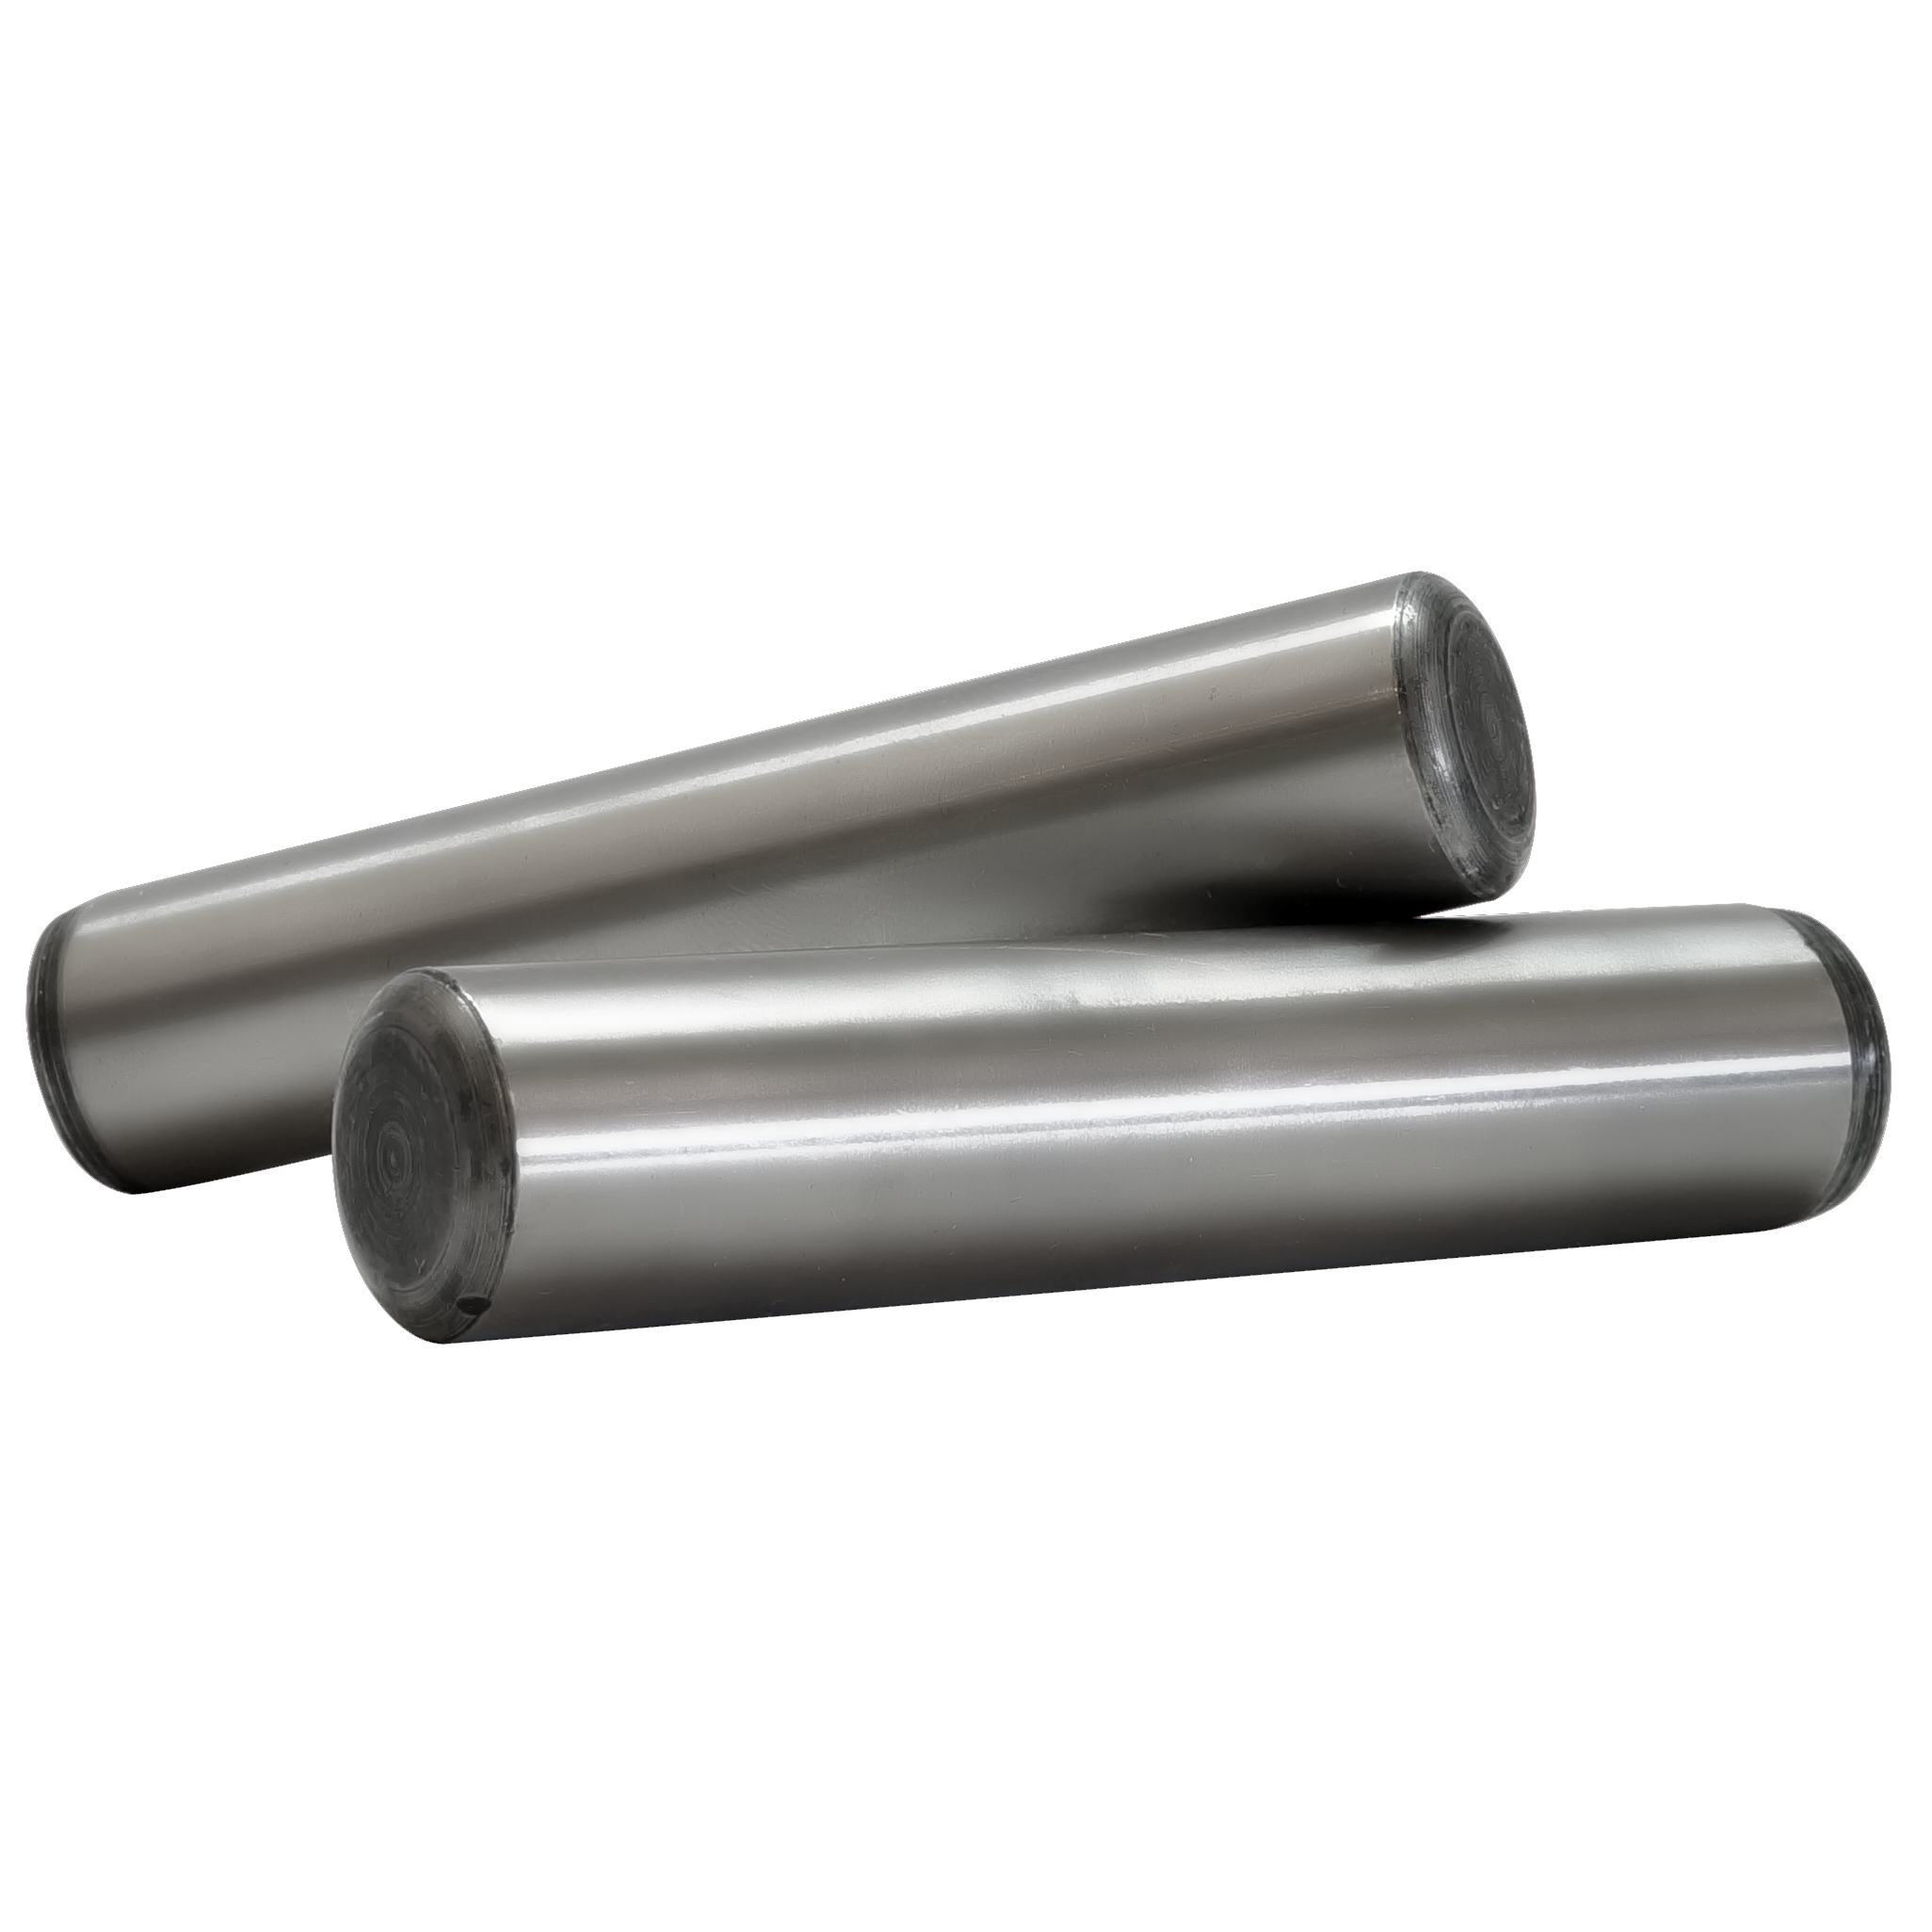 7/16x1 ASME B18.8.2 Alloy Steel Dowel Pin Hardened Ground 0.0002" Over Sized (Unbrako)